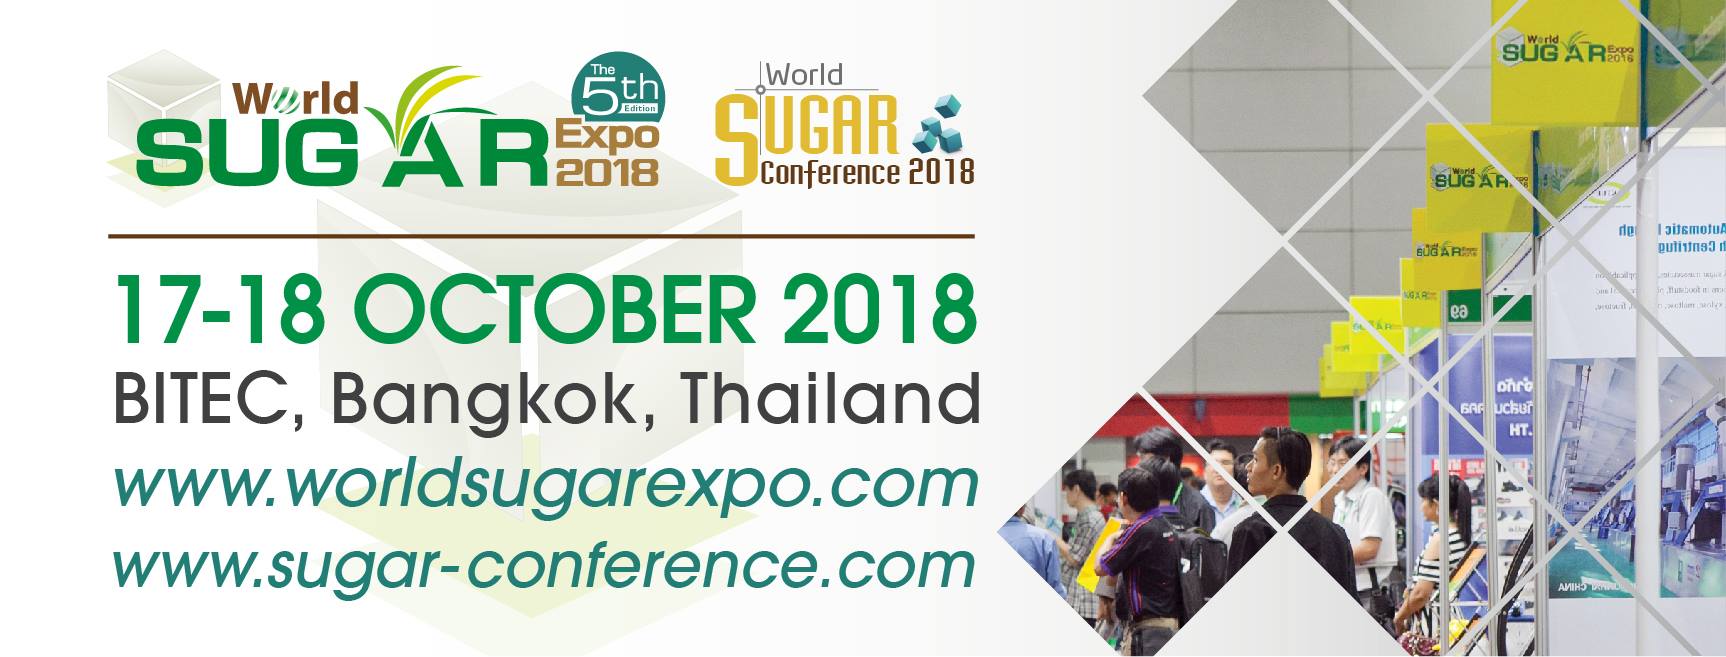 World Sugar Expo & Conference 2018 : 17-19 ตุลาคม พ.ศ. 2561